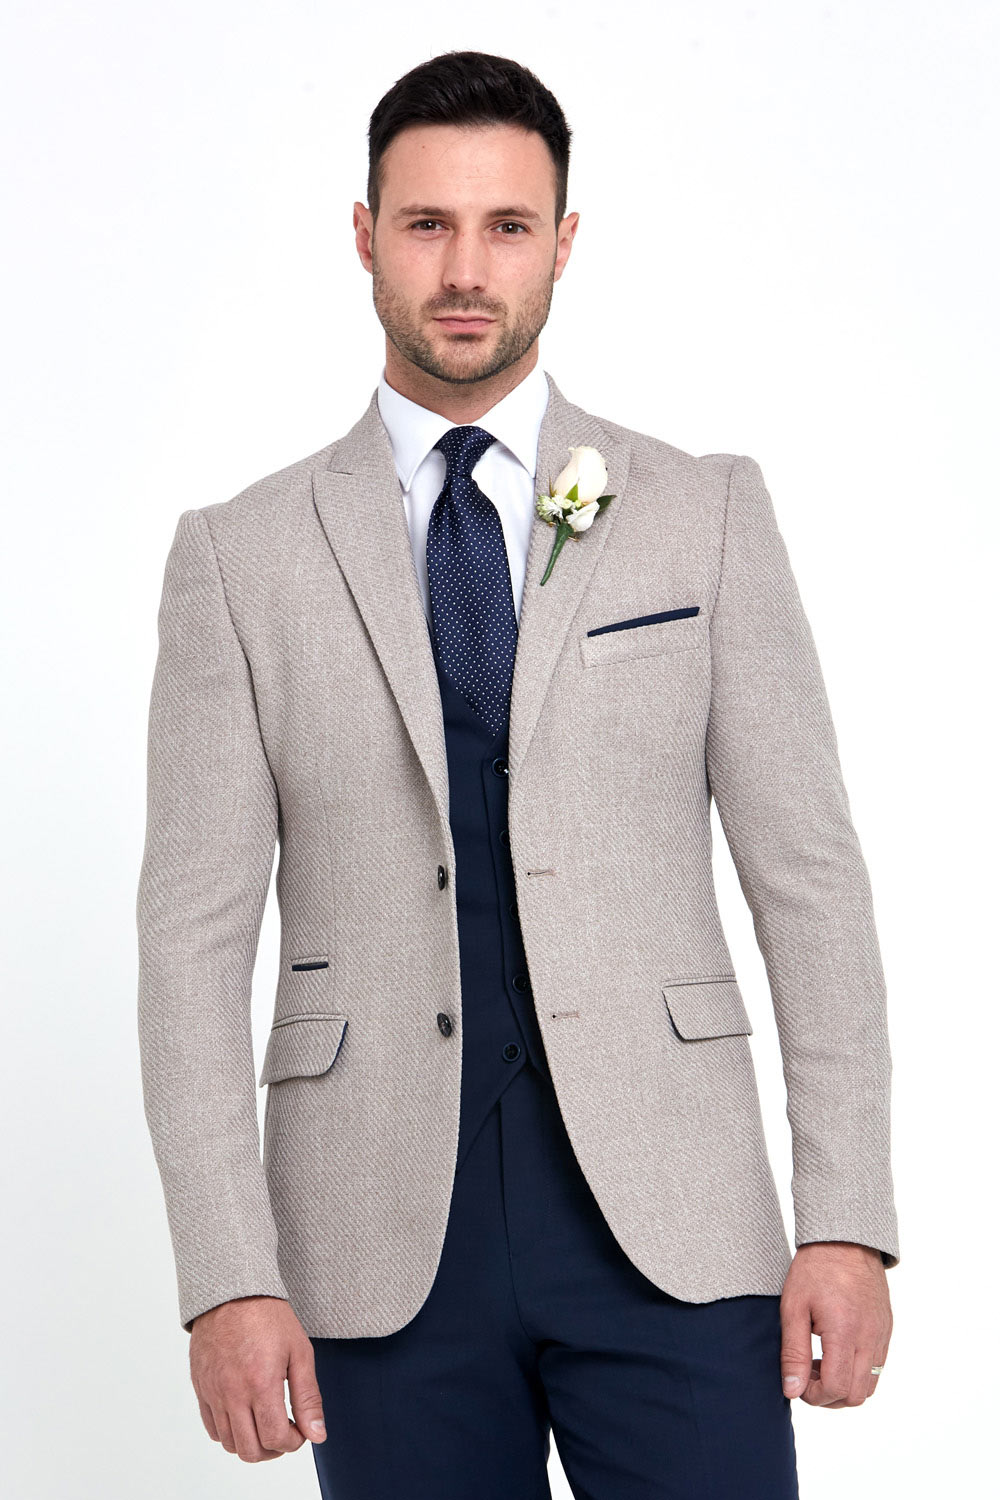 Simon Beige Jacket Navy Wedding Suit | mail.napmexico.com.mx